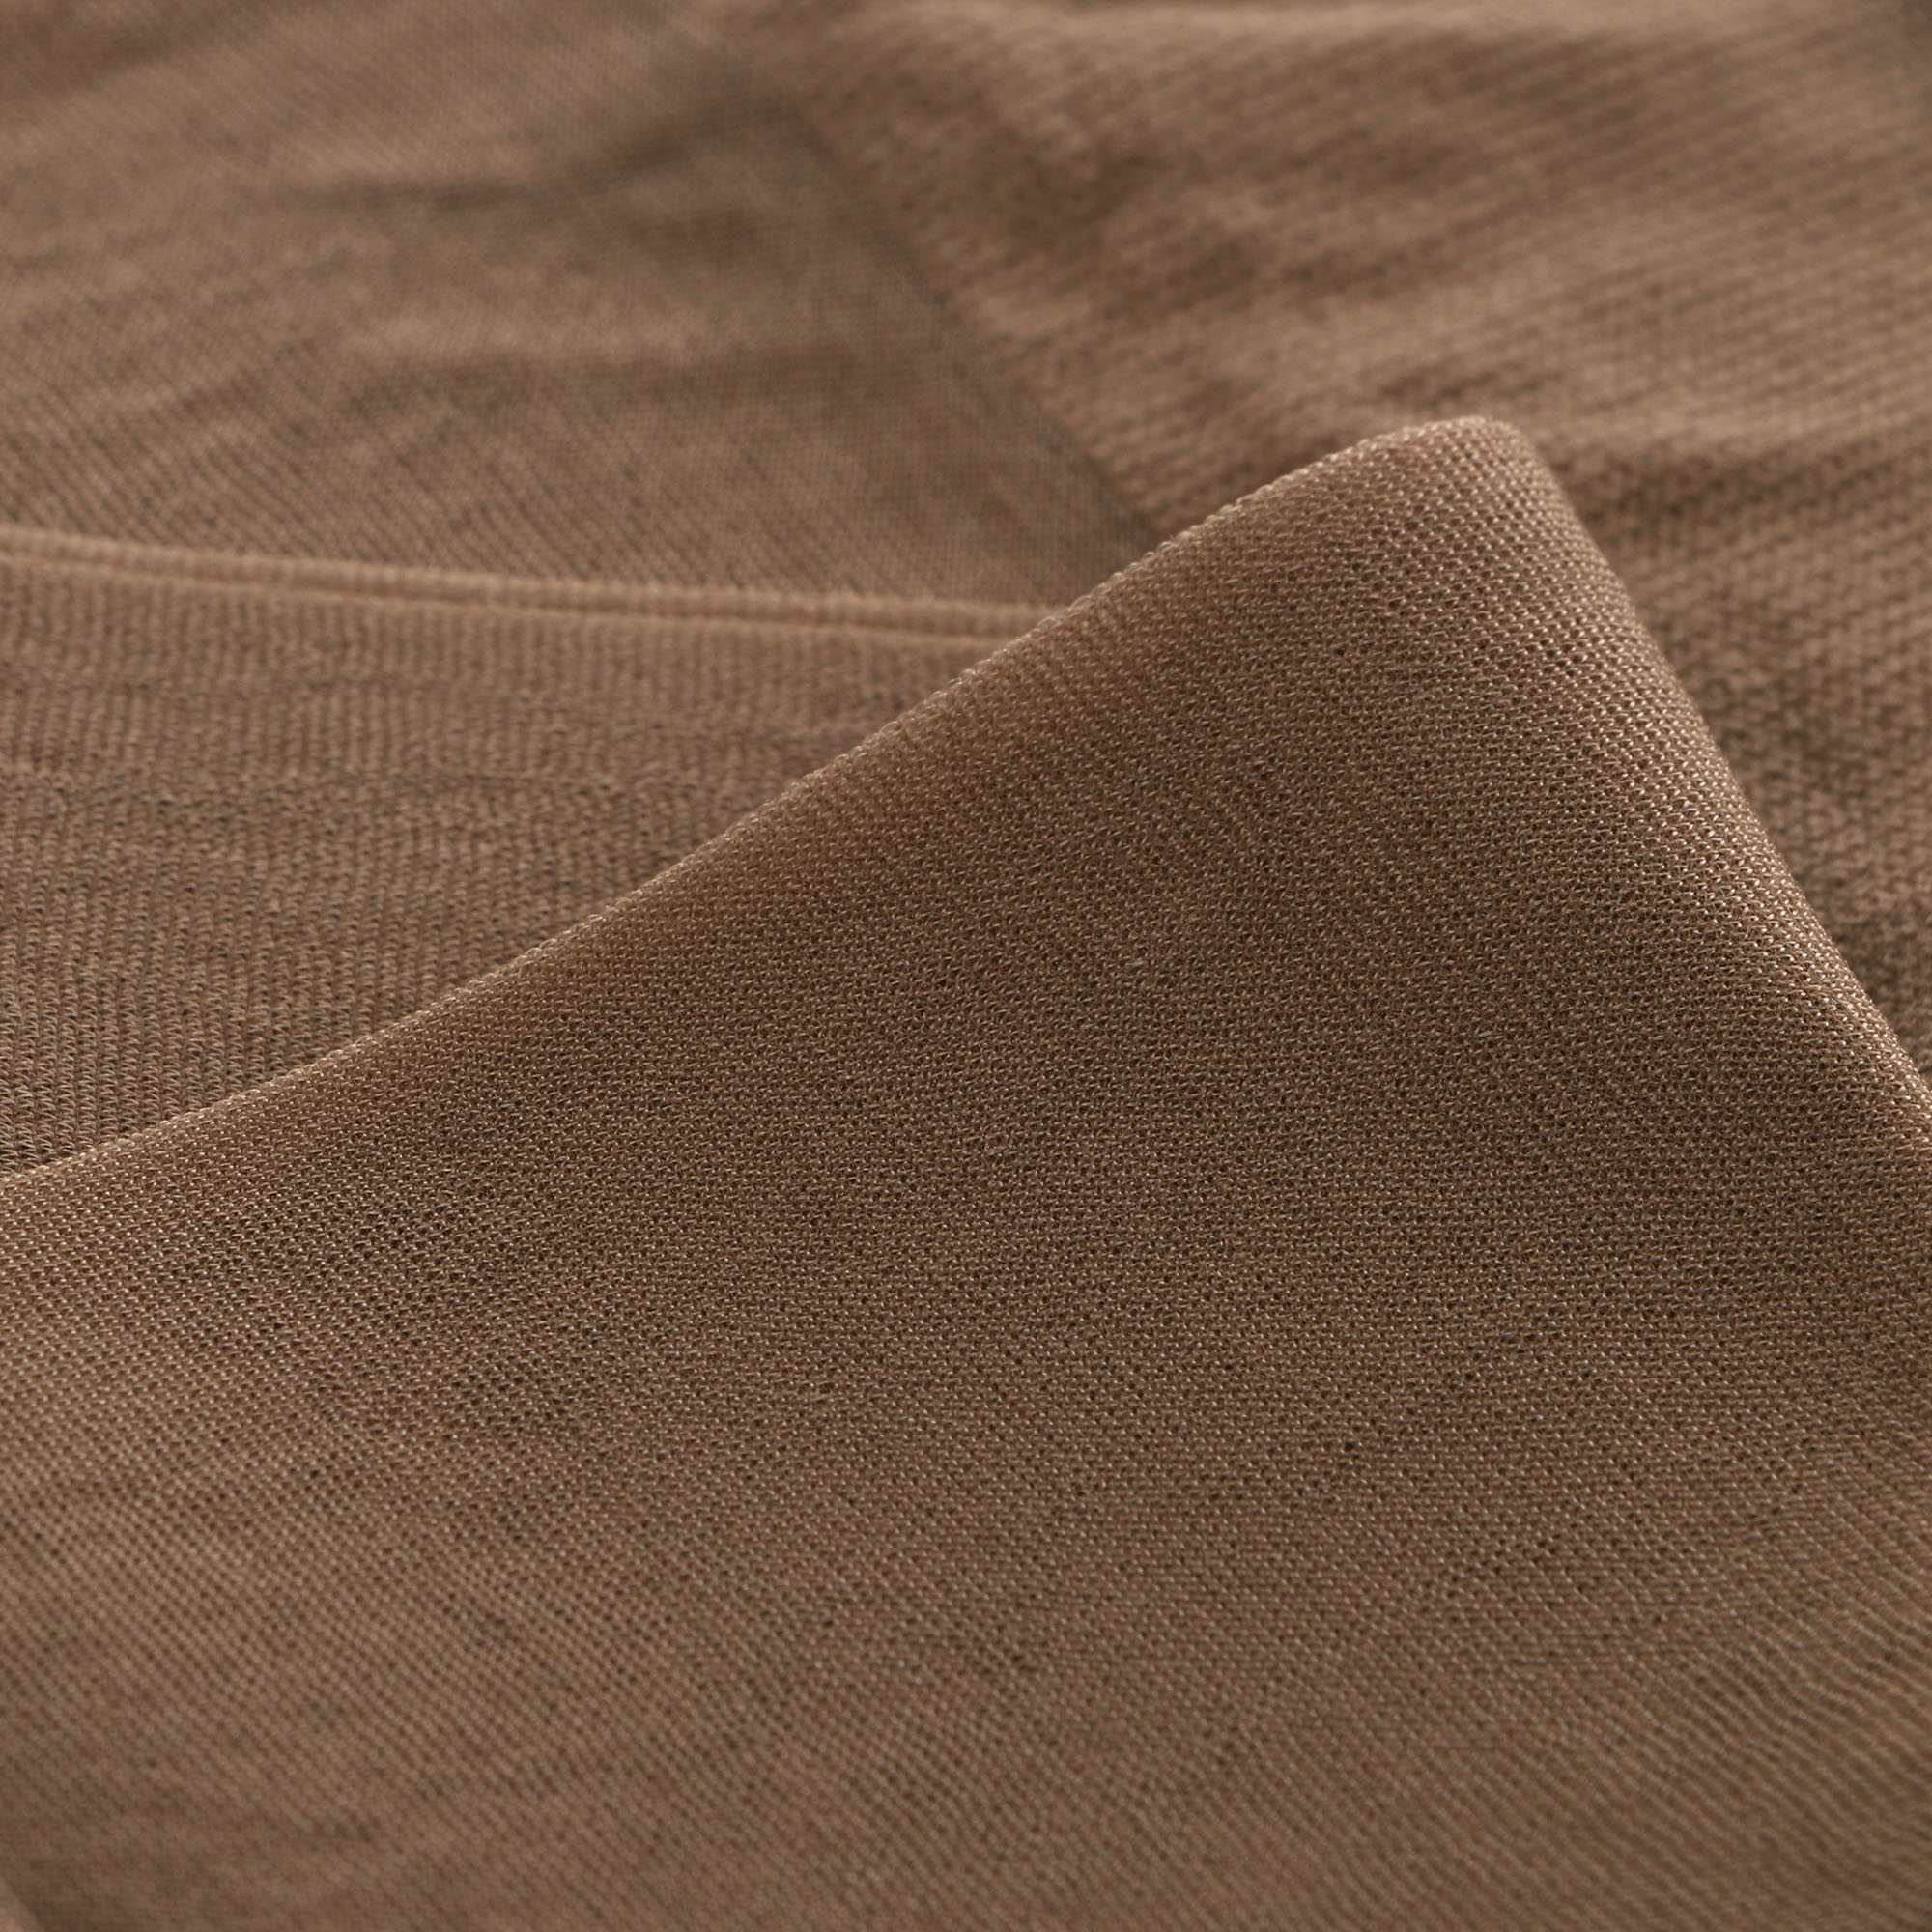 Колготки Sanpellegrino Support 40 Comfort Daino Maxi, цвет коричневый, размер 5 - фото 2